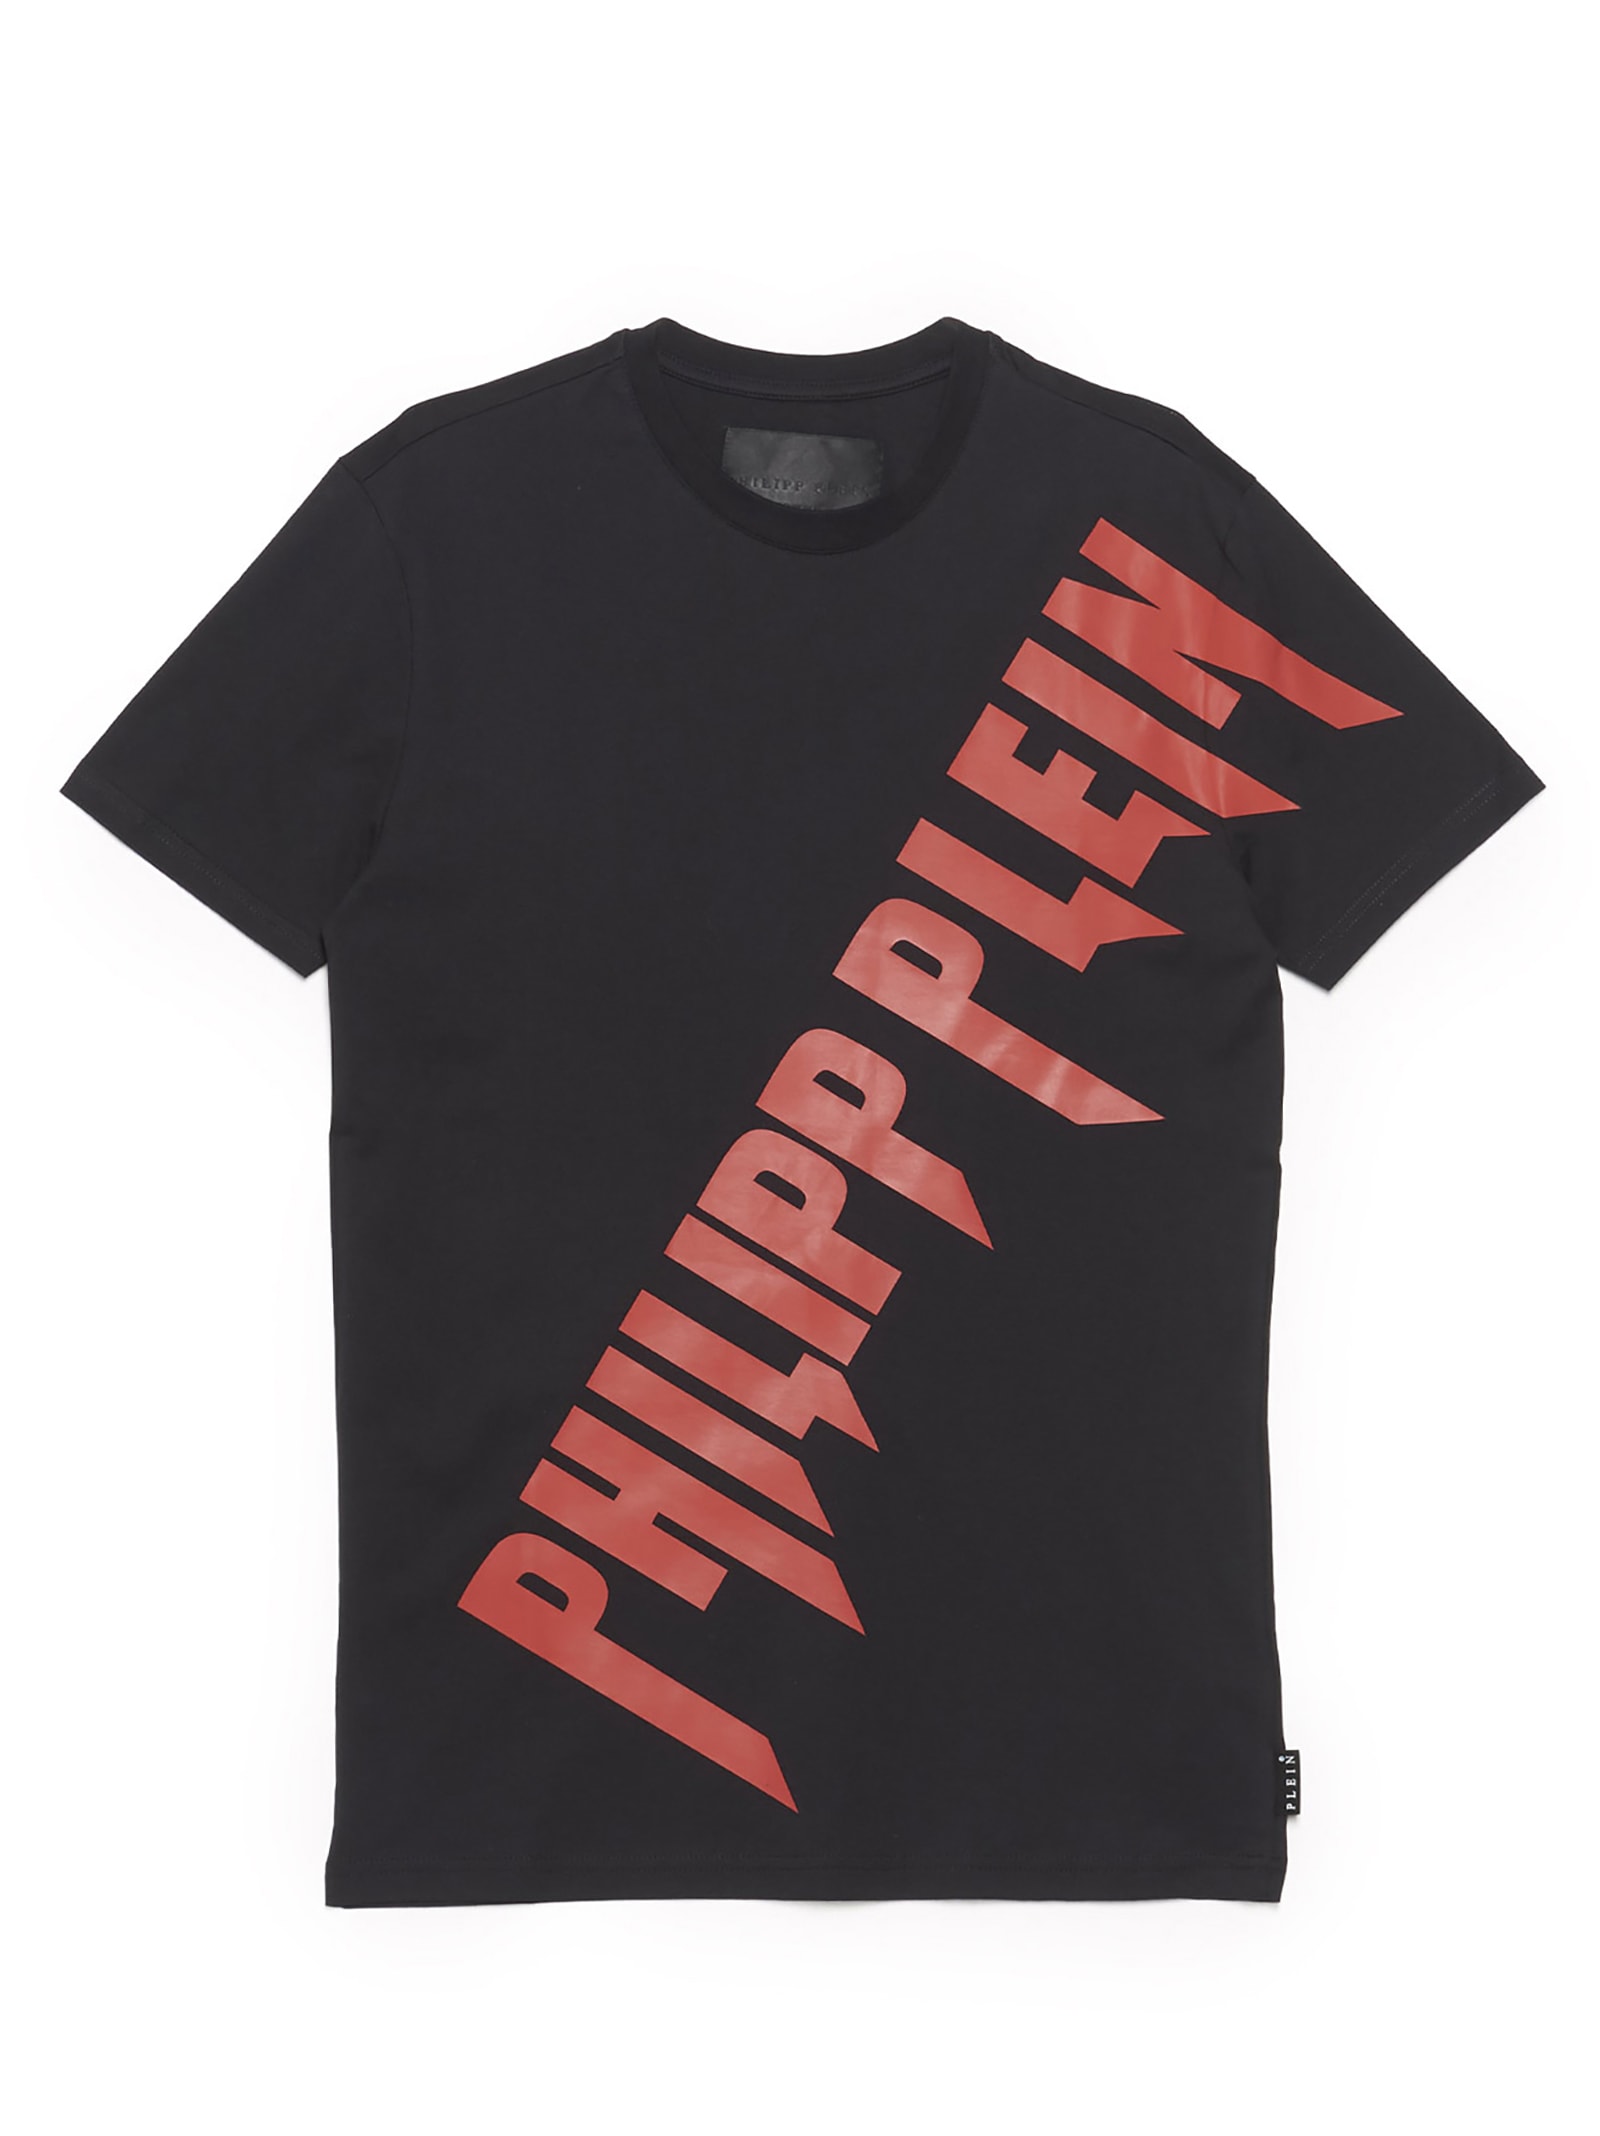 philipp plein t shirt sale